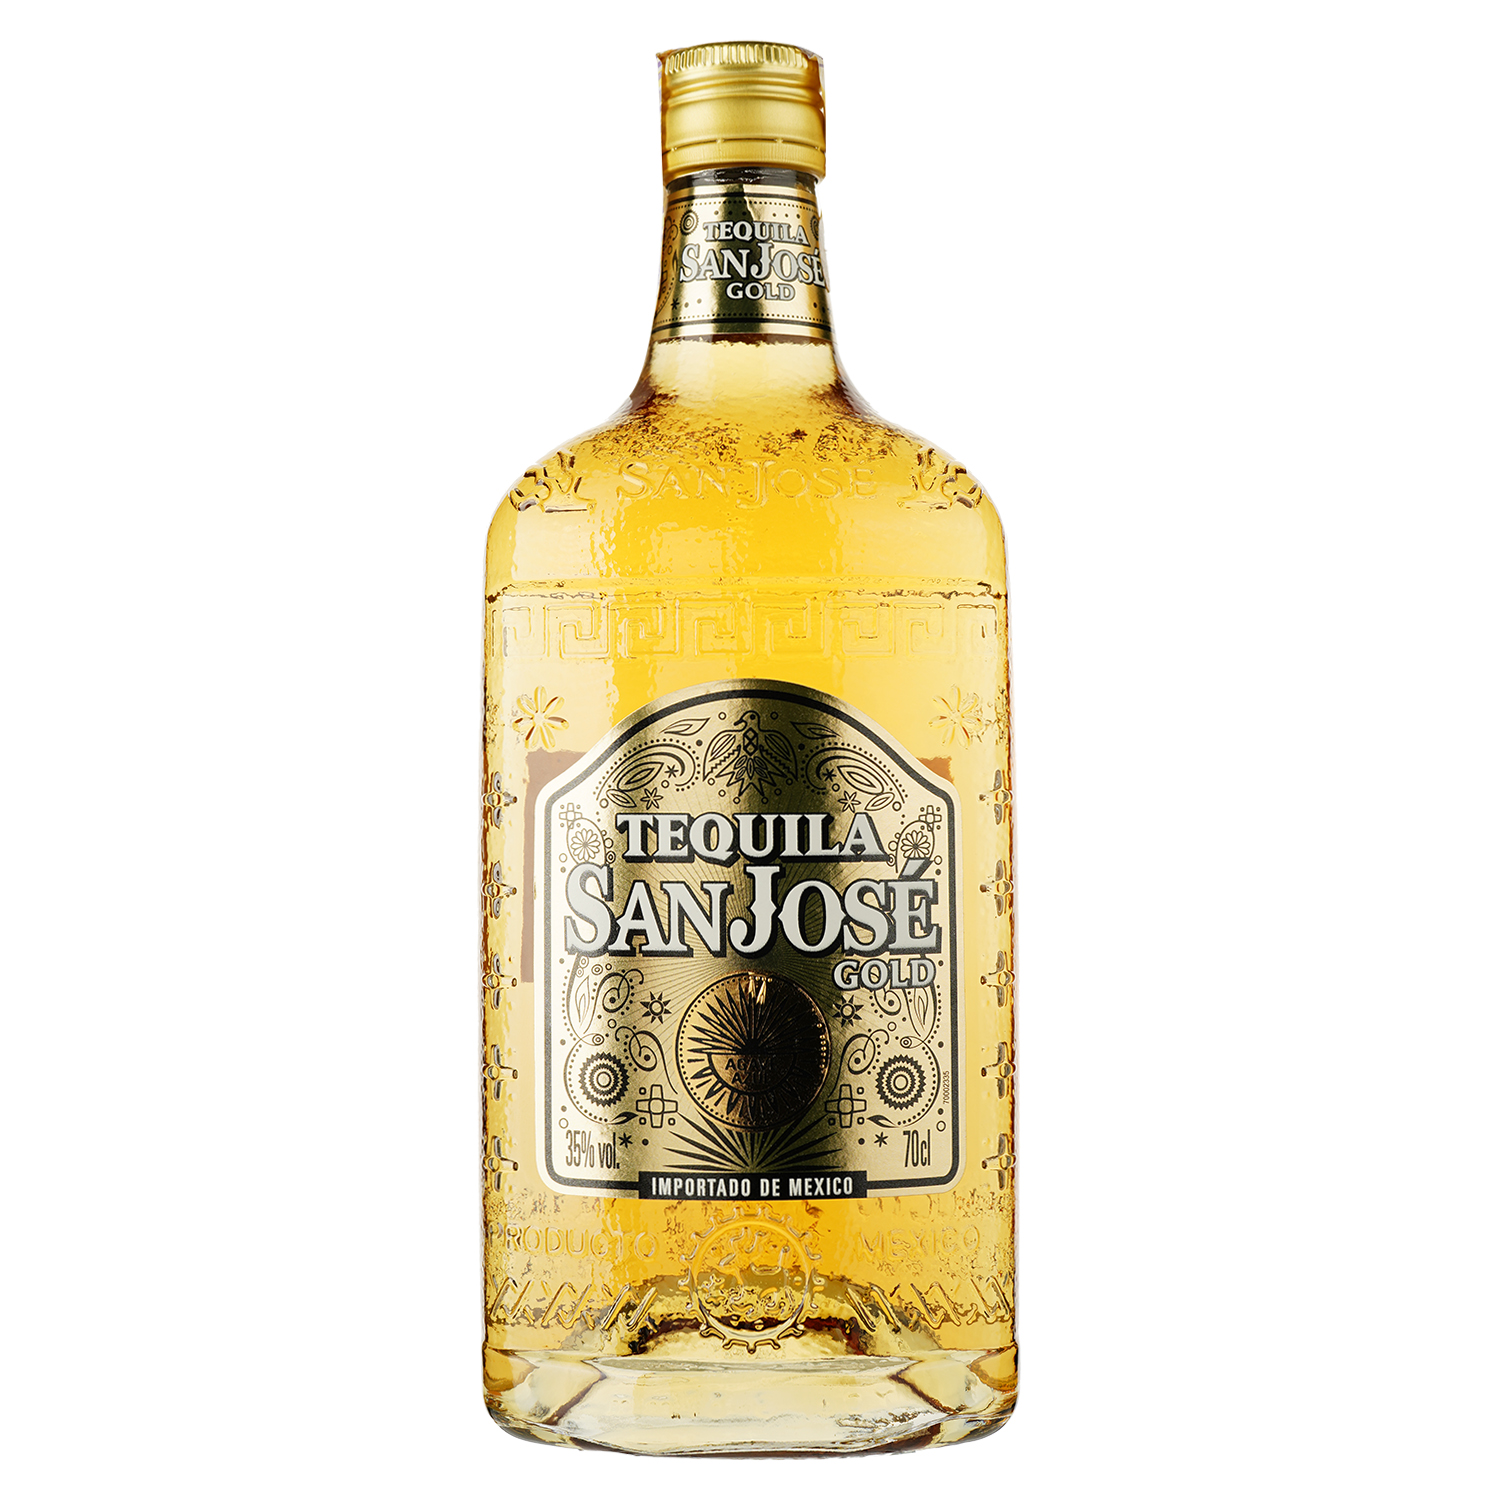 Текила Tequila San Jose Gold, 35%, 0.7 л - фото 1